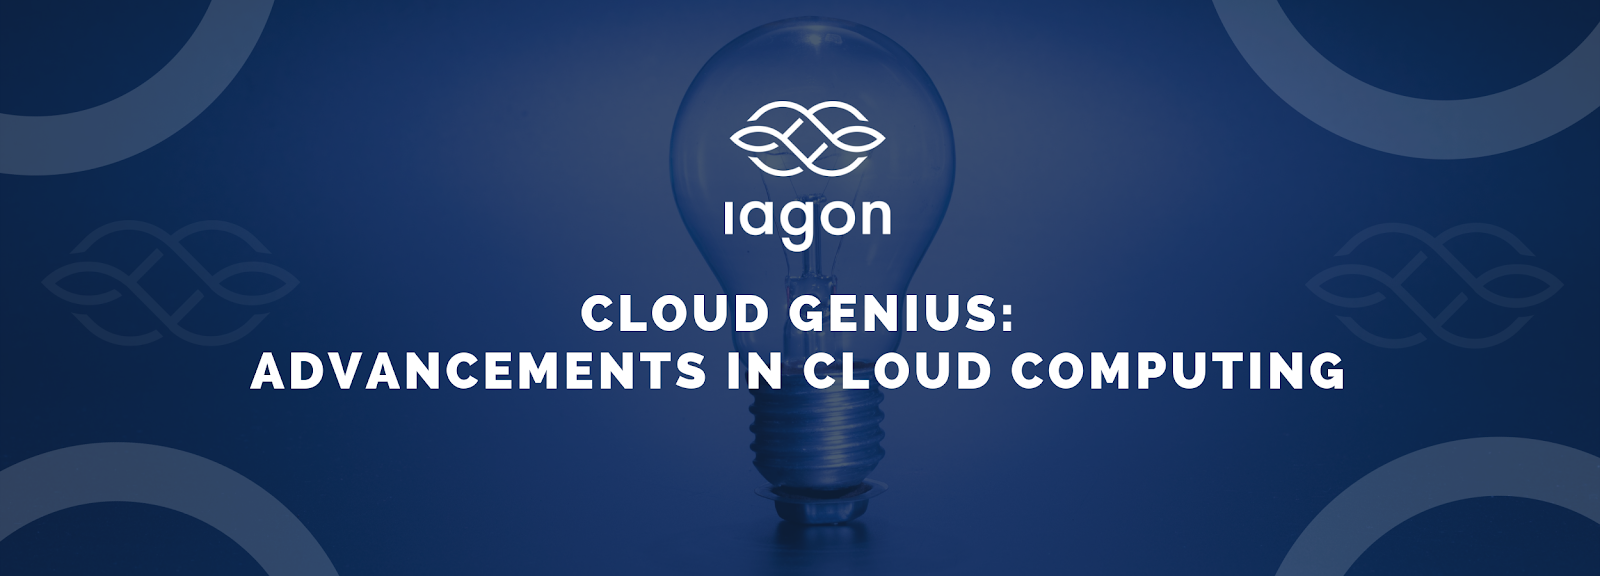 Cloud Genius: Advancements in Cloud Computing